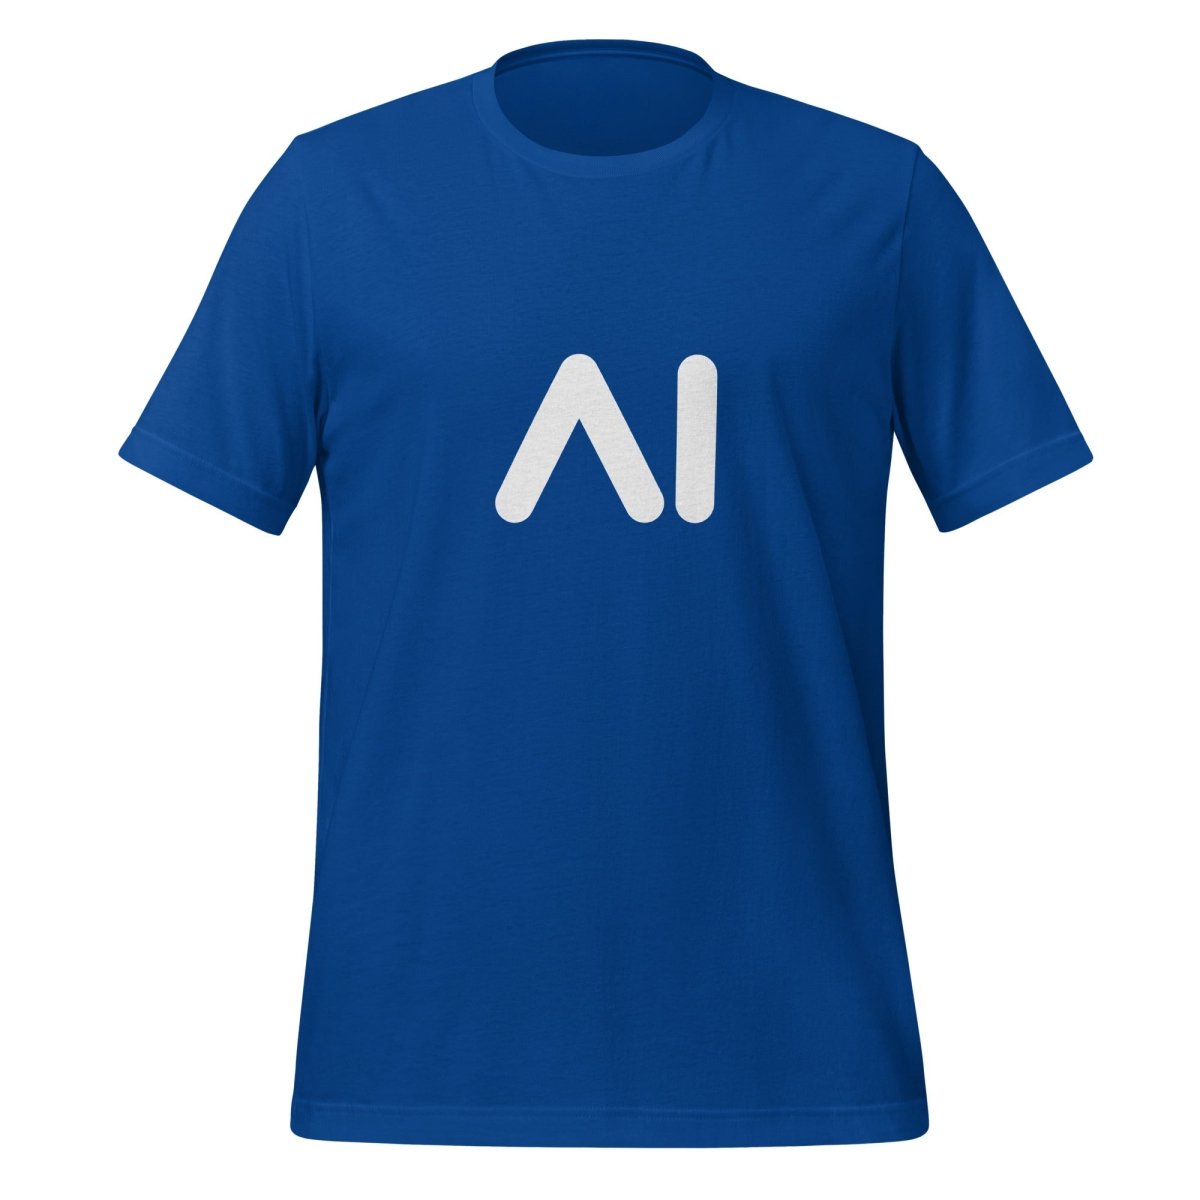 AI Logo T - Shirt 2 (unisex) - True Royal - AI Store